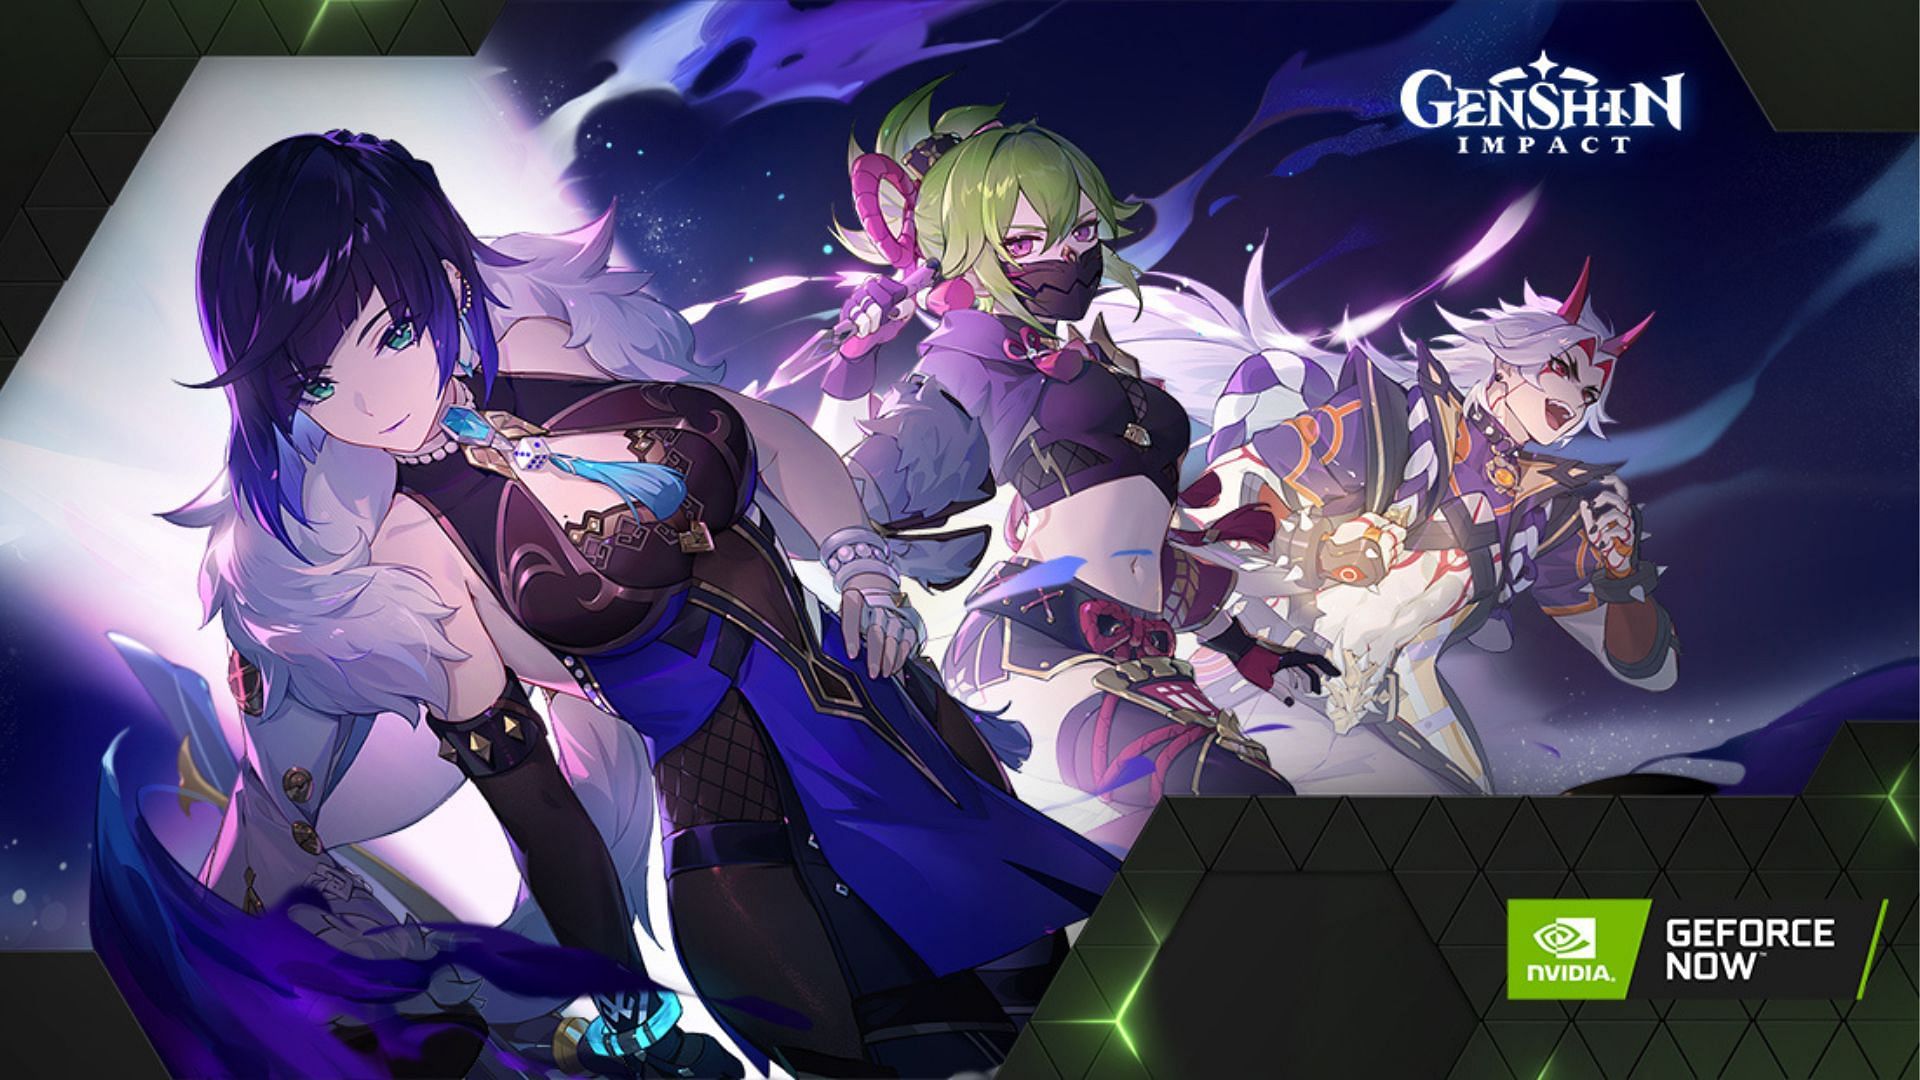 Genshin Impact is available on GeForce Now (Image via HoYoverse)